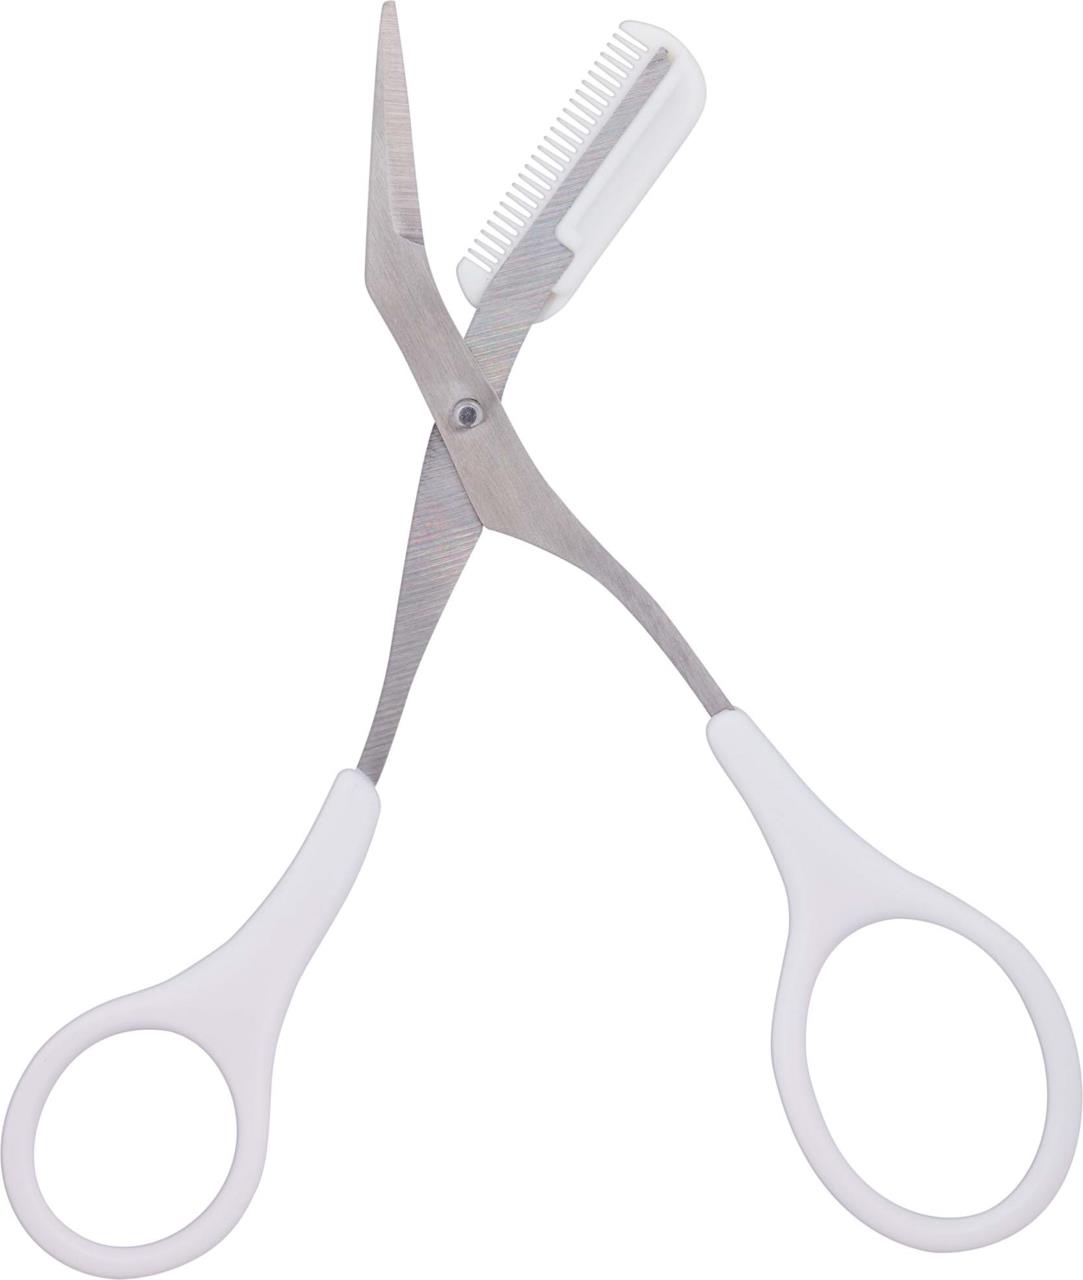 Essence Eyebrow Scissors   Comb 2435 818 0000 1 ?ref=1147412&w=1280&h=1280&mode=max&quality=75&format=jpg